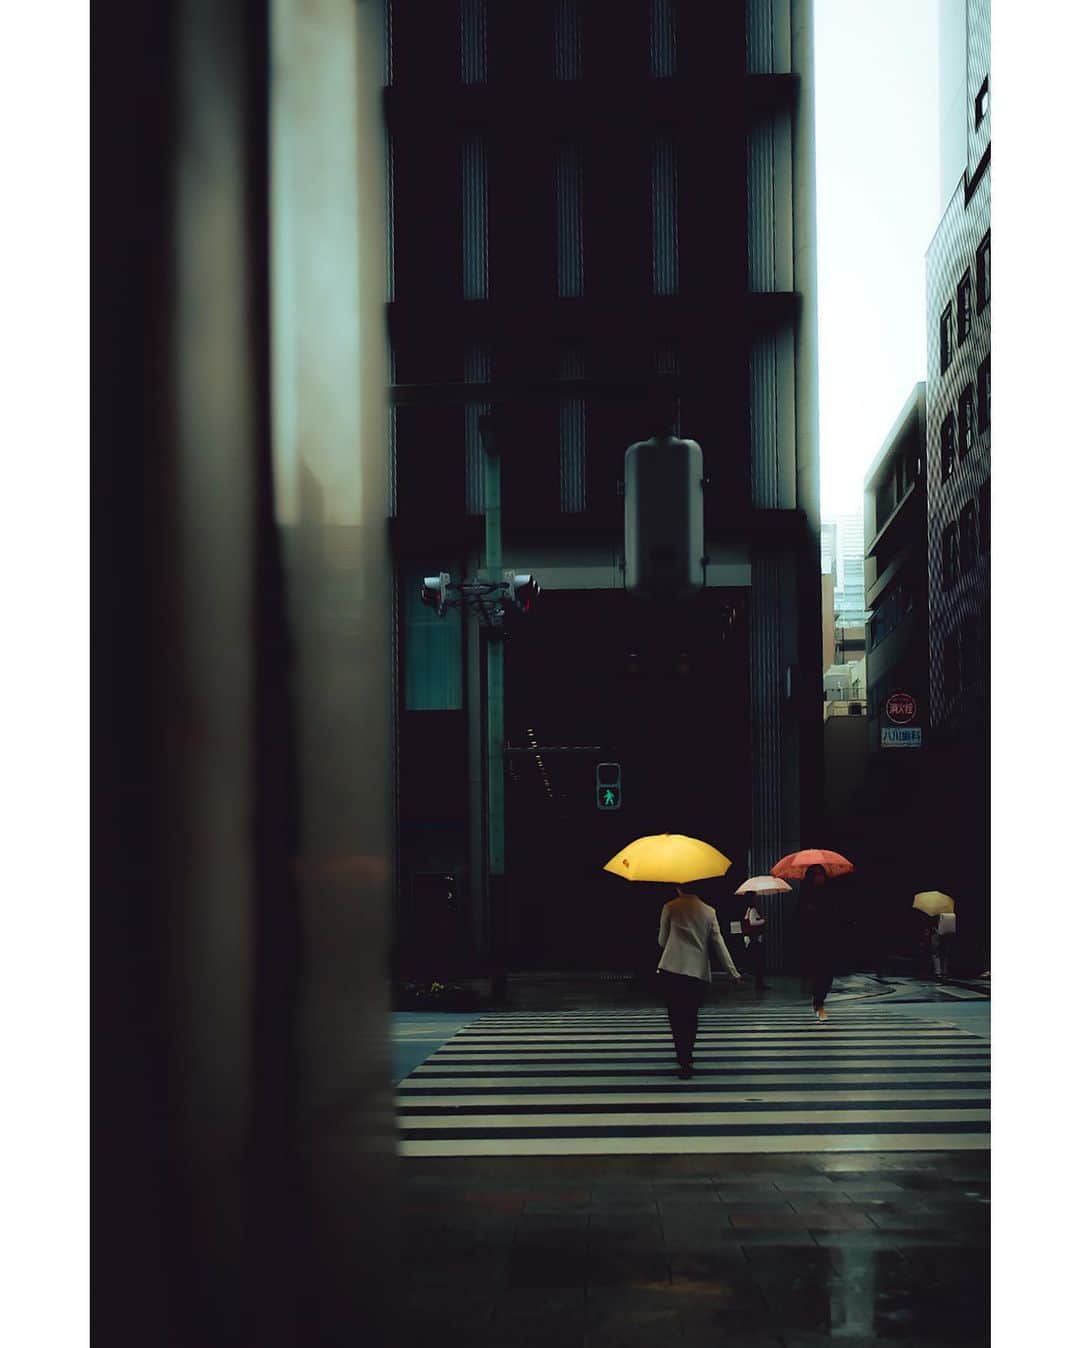 kazhixのインスタグラム：「Tokyo Rhapsody  The street where multicolored umbrellas are in full bloom  #映画のワンシーンのような一枚を  ⤴︎みなさんもタグ気軽に使ってくださいね。  #fujifilm_xseries #今日もx日和 #富士フイルム  #FUJIFILM #instagram  #igersjp #HelloFrom Tokyo #ファインダー越しの私の世界  #tokyocameraclub #mst_photo #daily_photo_jpn #tokyoartsandculture #JapanCityBlues #TokyoTokyo #streetfinder #eyephotomagazine #cinema_streets  #urbanromantix #street_avengers #streetleaks #sublimestreet #streets_storytelling #storyofthestreet #streetsgrammer #streetmoment #voidtokyo  #streetgrammers #shadow_magazine #subshooters」